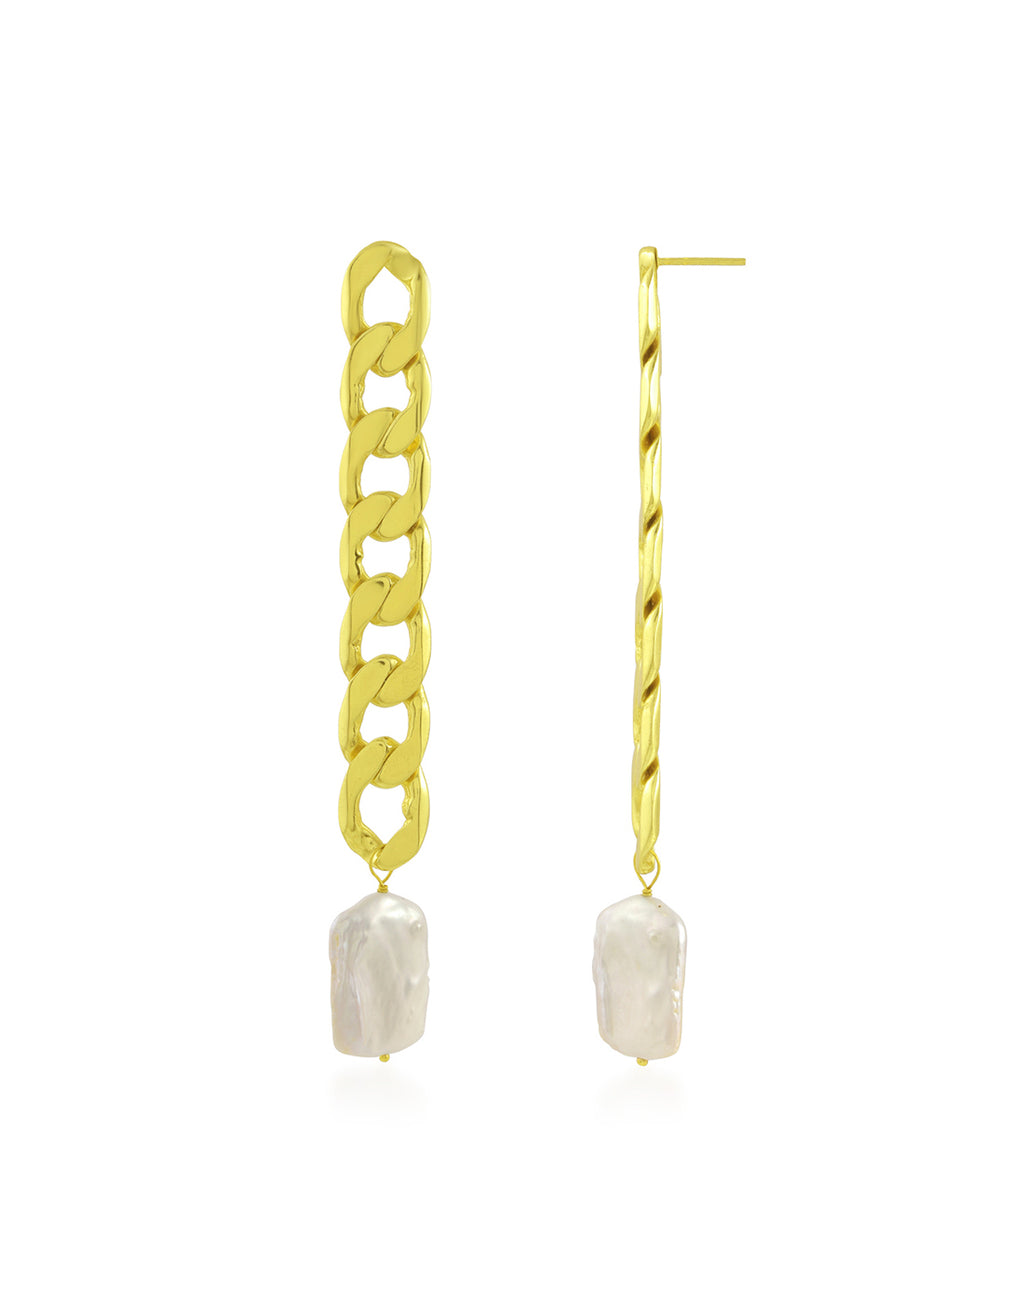 Cuban Chain Baroque Pearl Earrings - Statement Earrings - Gold-Plated & Hypoallergenic Jewellery - Made in India - Dubai Jewellery - Dori